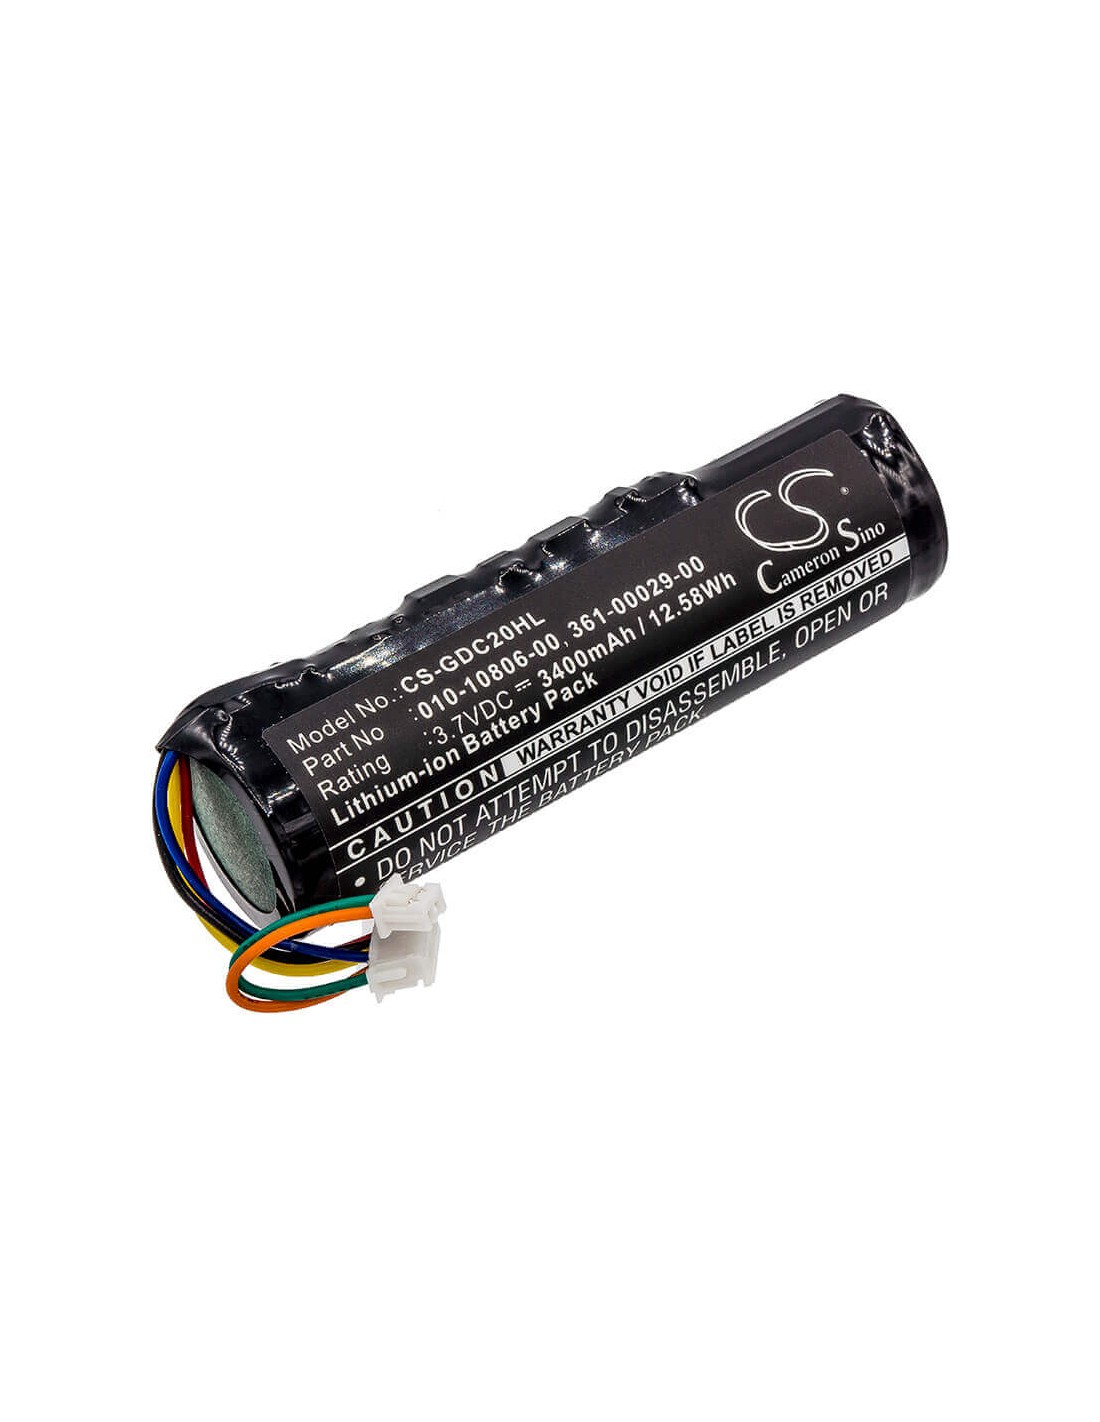 Battery for Garmin, Astro System Dc20, Dc20, Dc30, Dc40 3.7V, 3400mAh - 12.58Wh